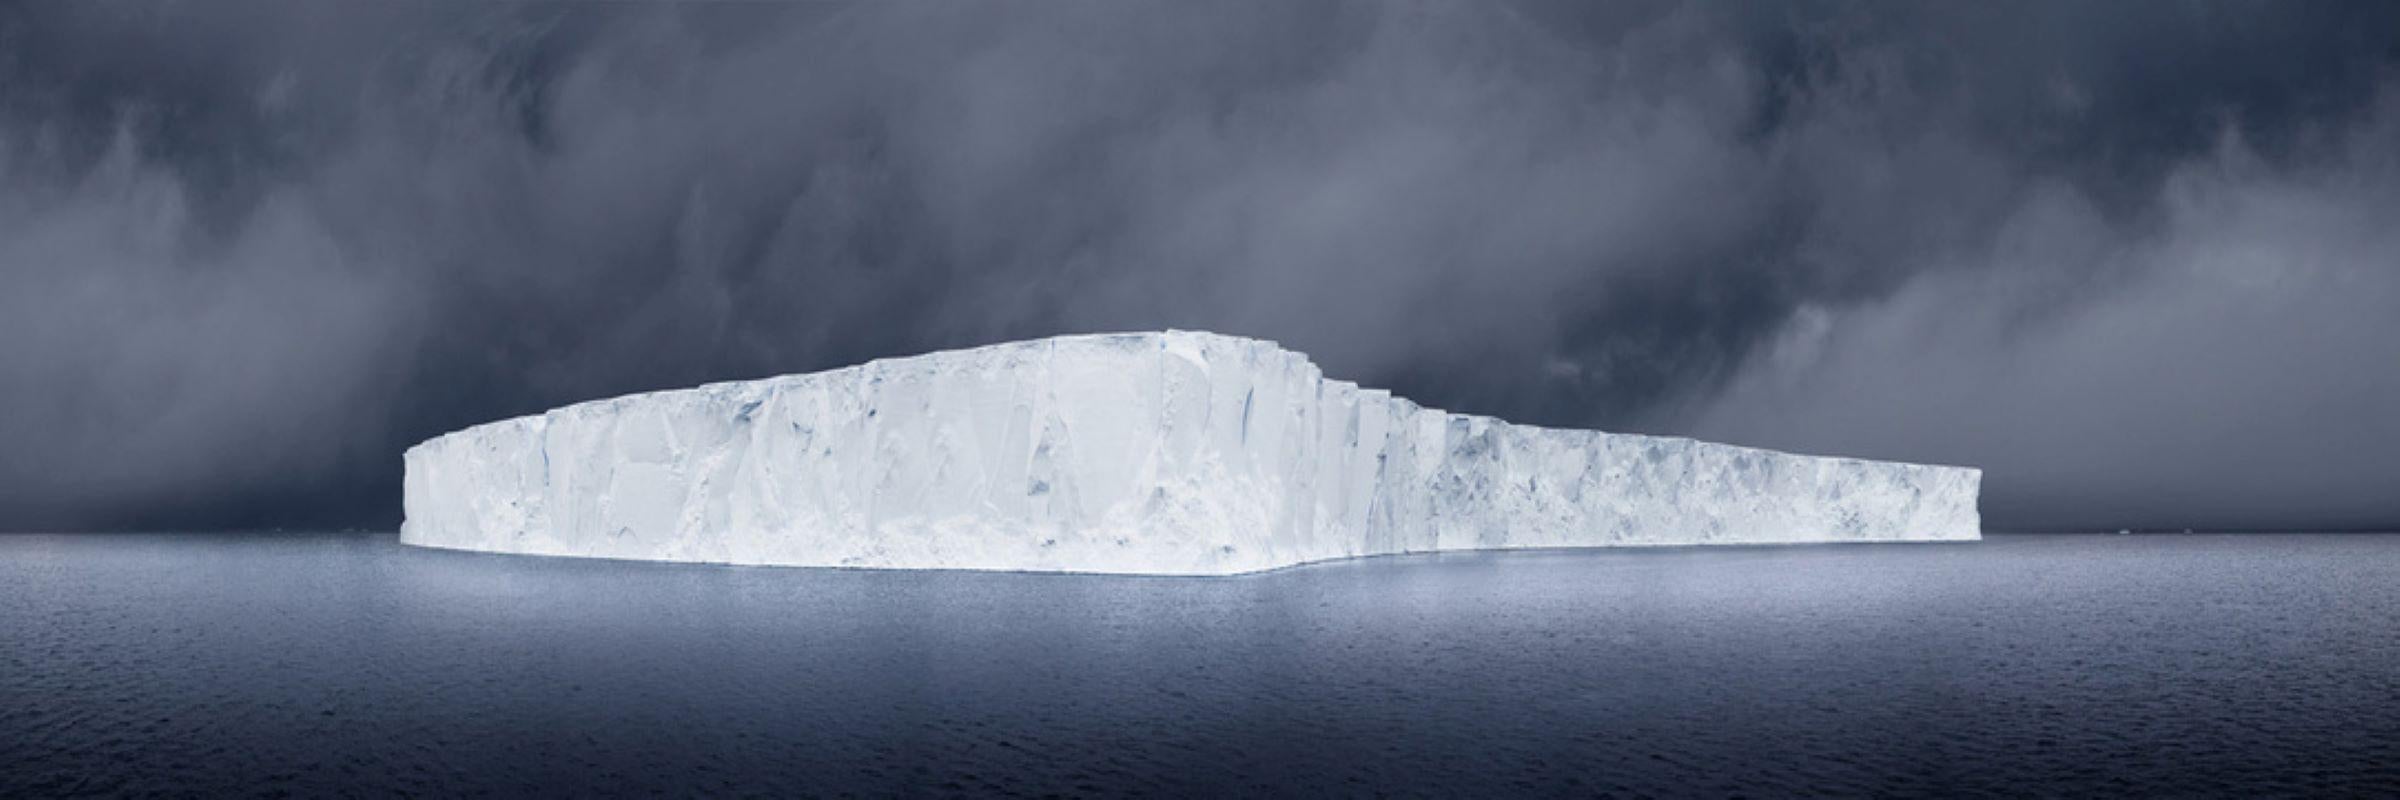 David Burdeny - Blue Monday, Antarctica, Photography 2020, Printed After